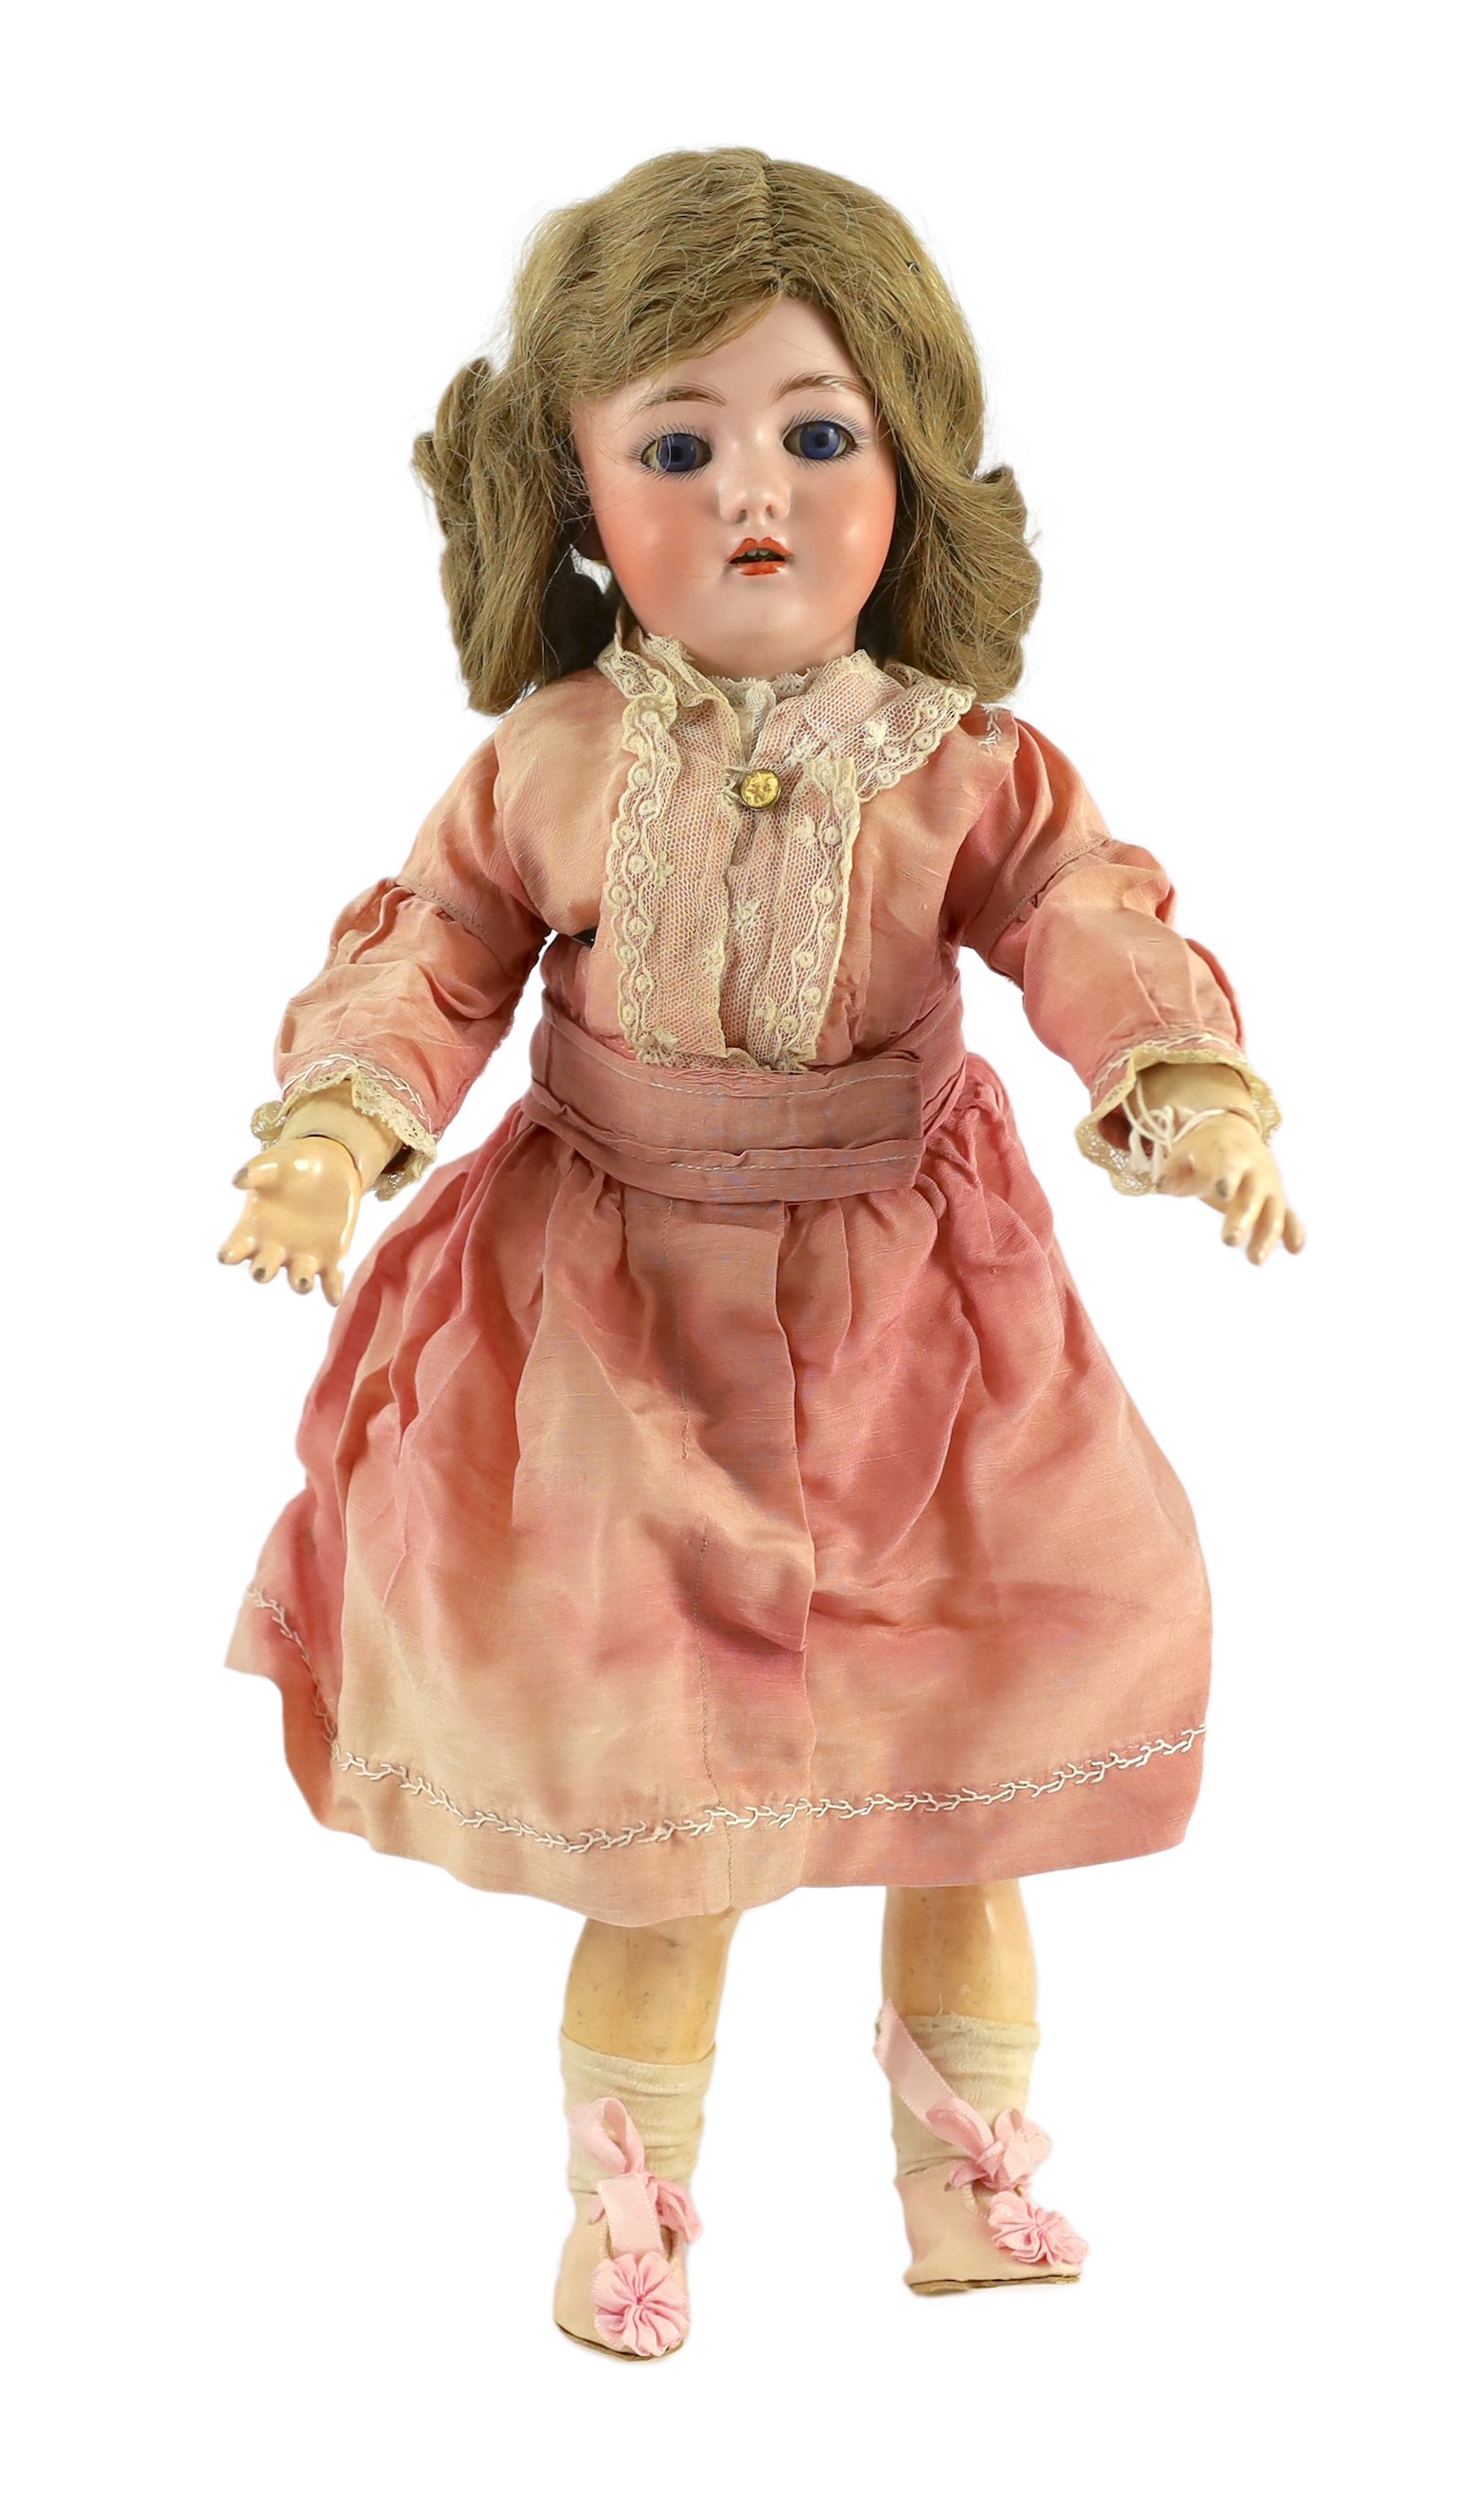 A Simon & Halbig S. & C. bisque doll, German, circa 1895, 17in.                                                                                                                                                             